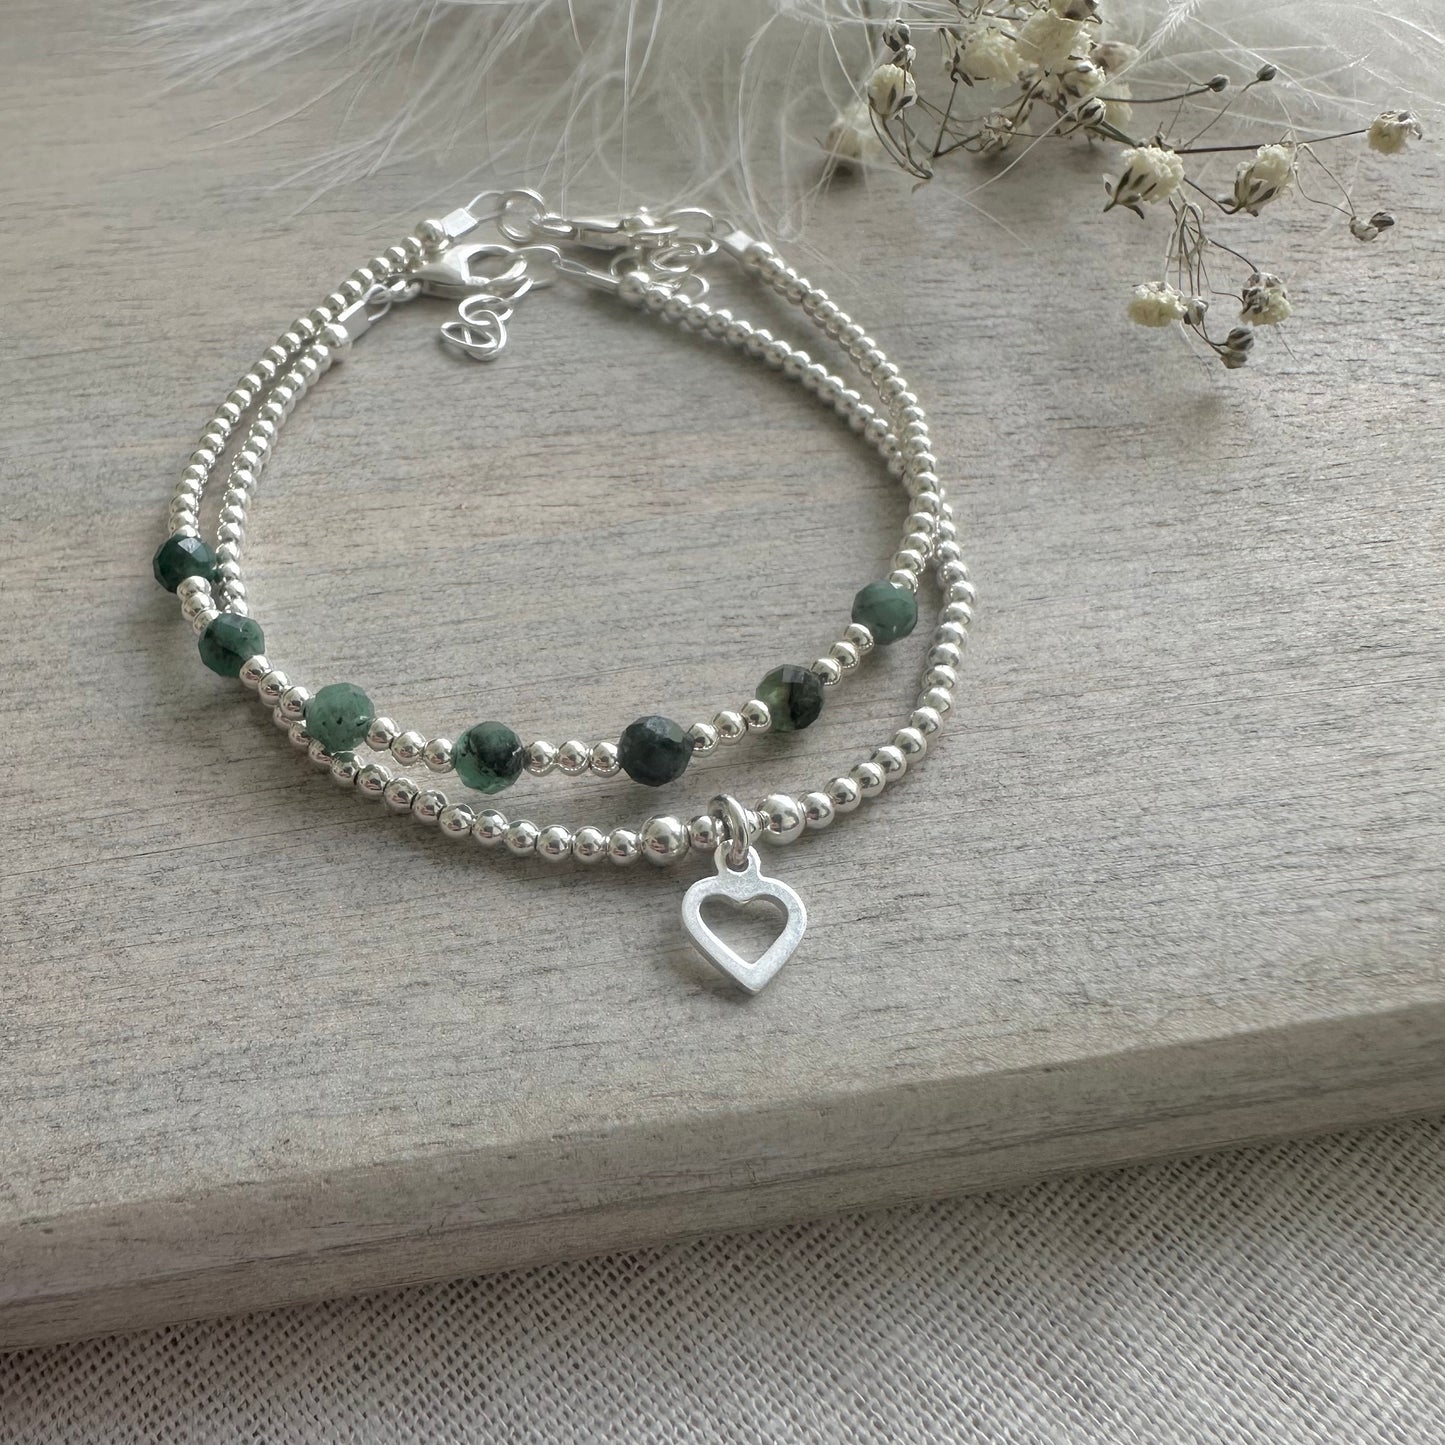 Emerald May Birthstone Bracelet Set in Sterling Silver